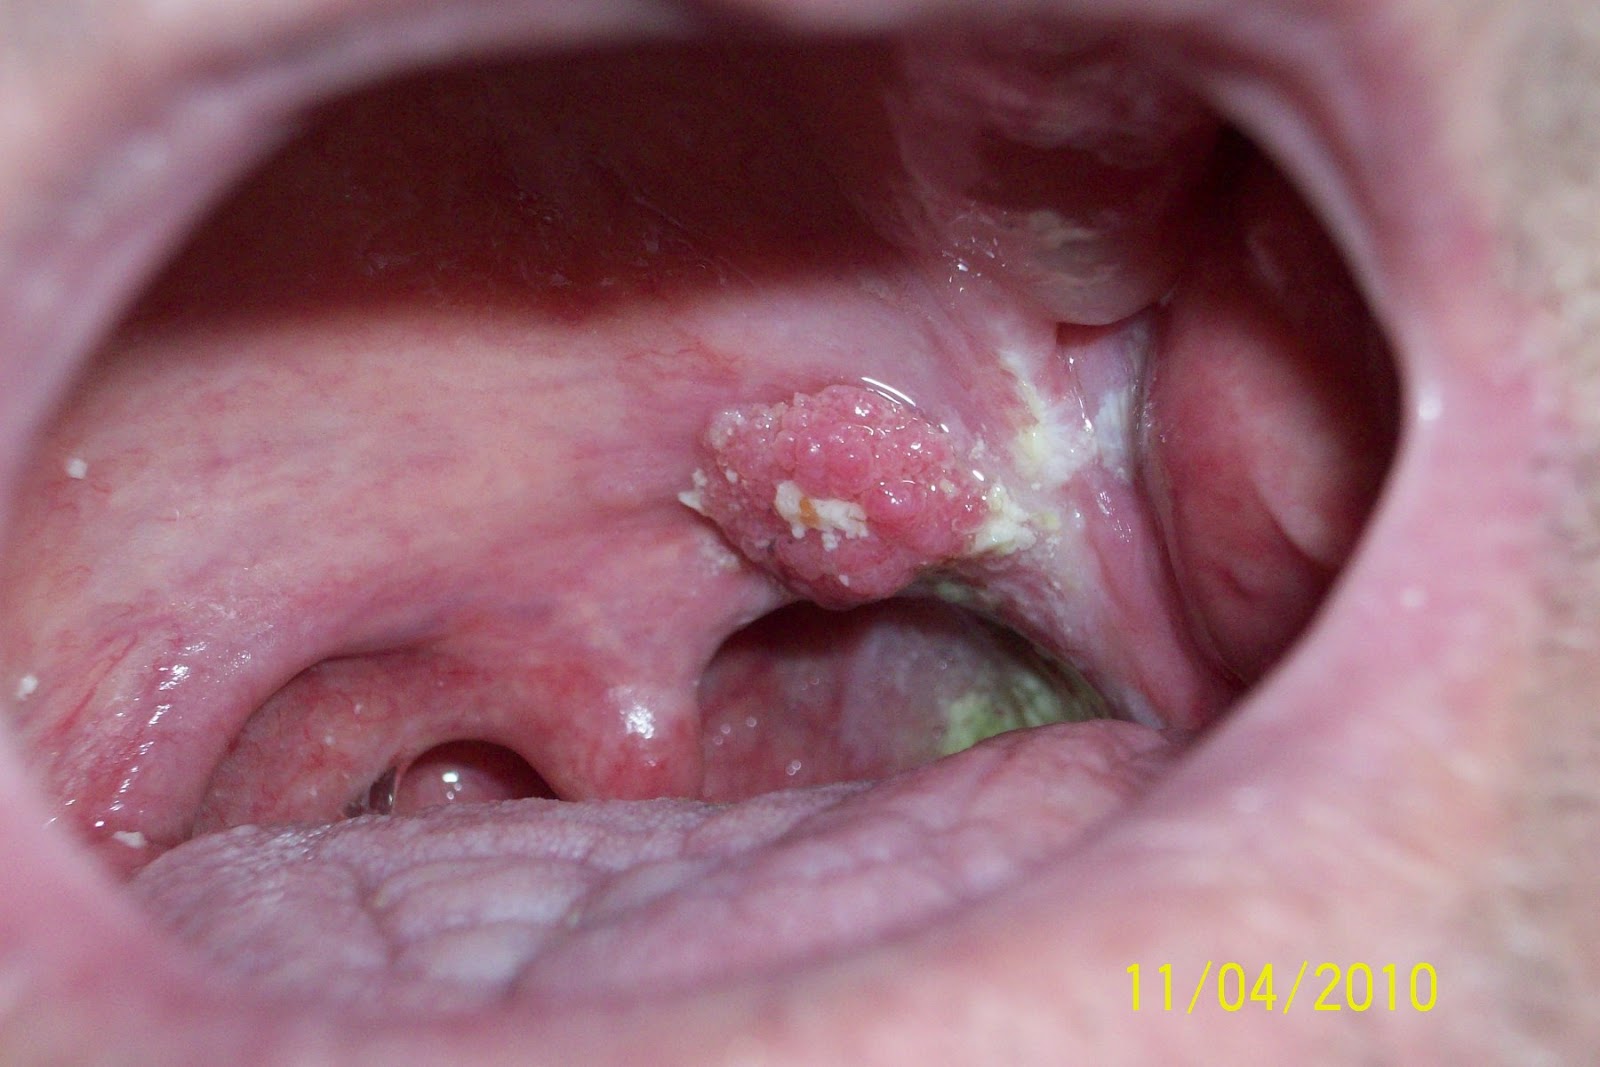 Benign neoplasm larynx papillomatosis. Papiloma em palato mole